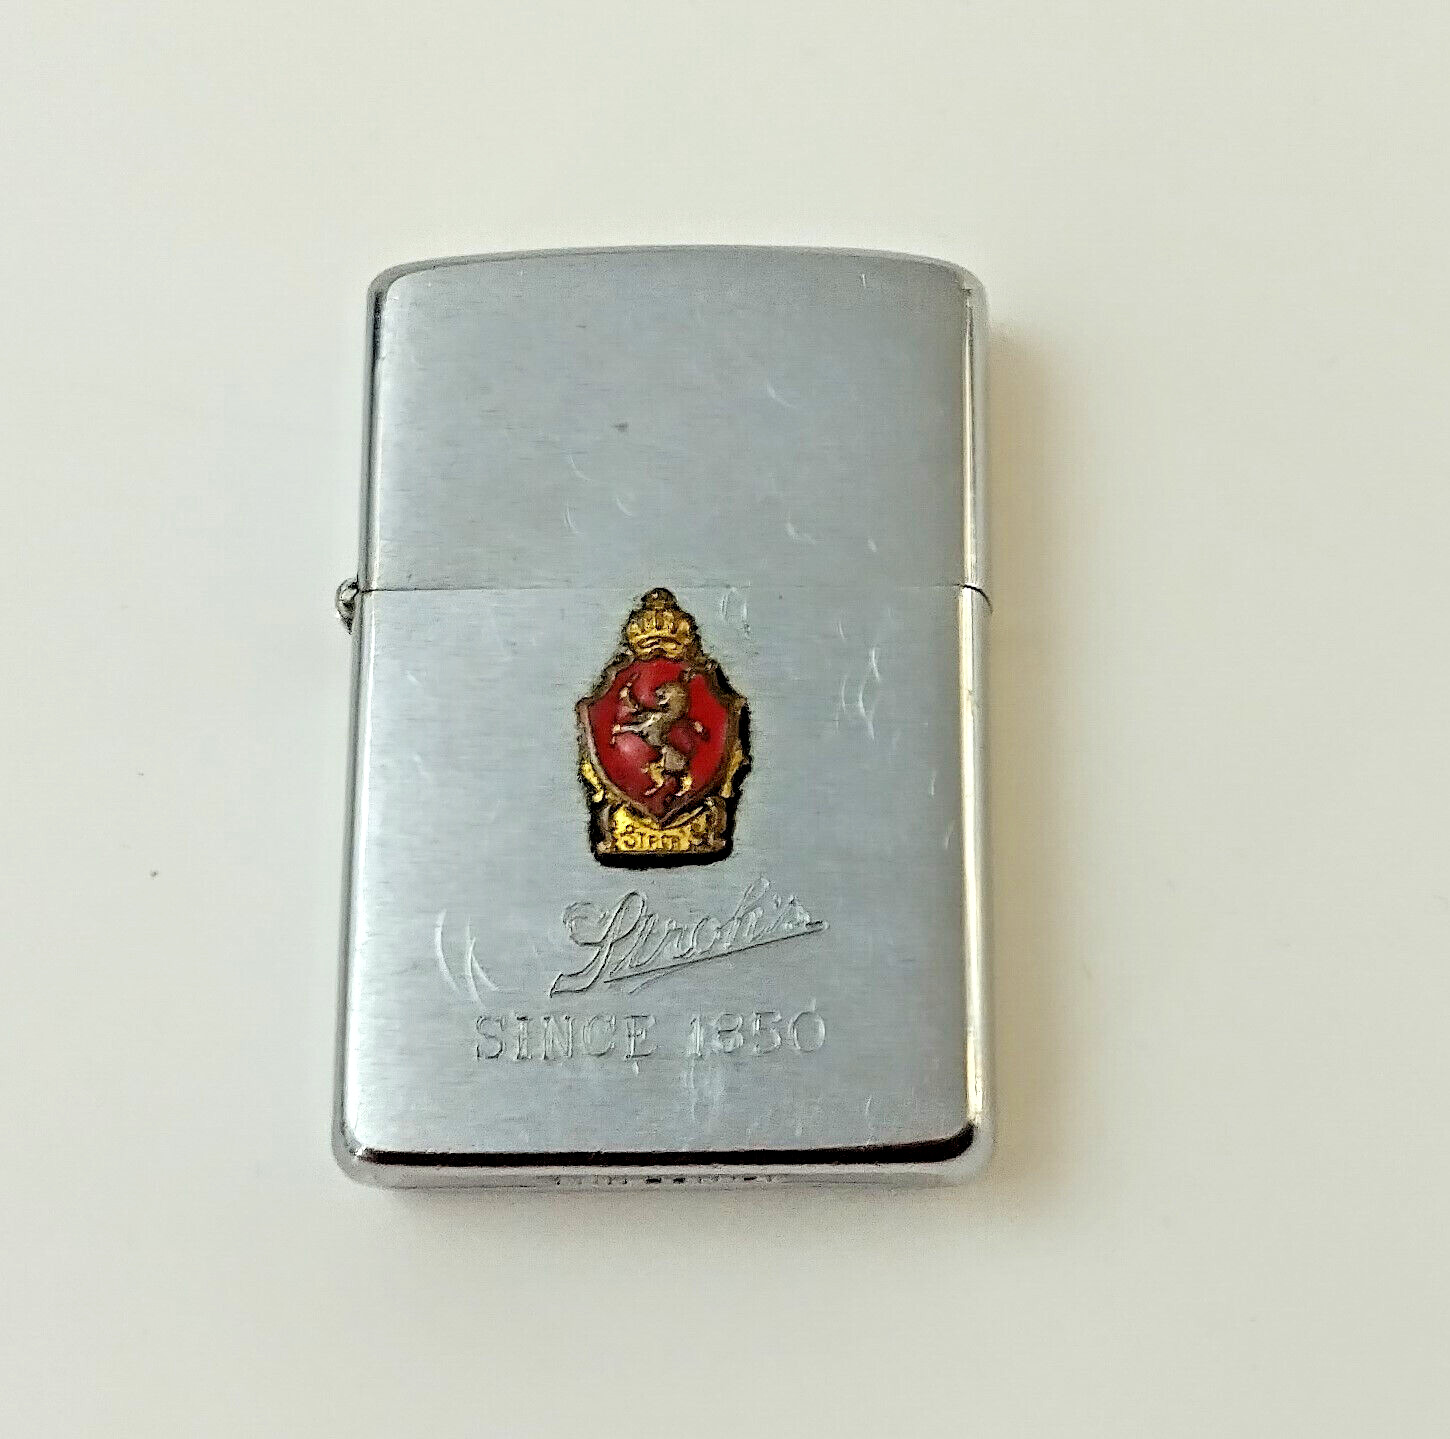 Rare Vintage Stroh’s Beer Brushed Chrome Zippo Lighter 1960 W/badge Nice